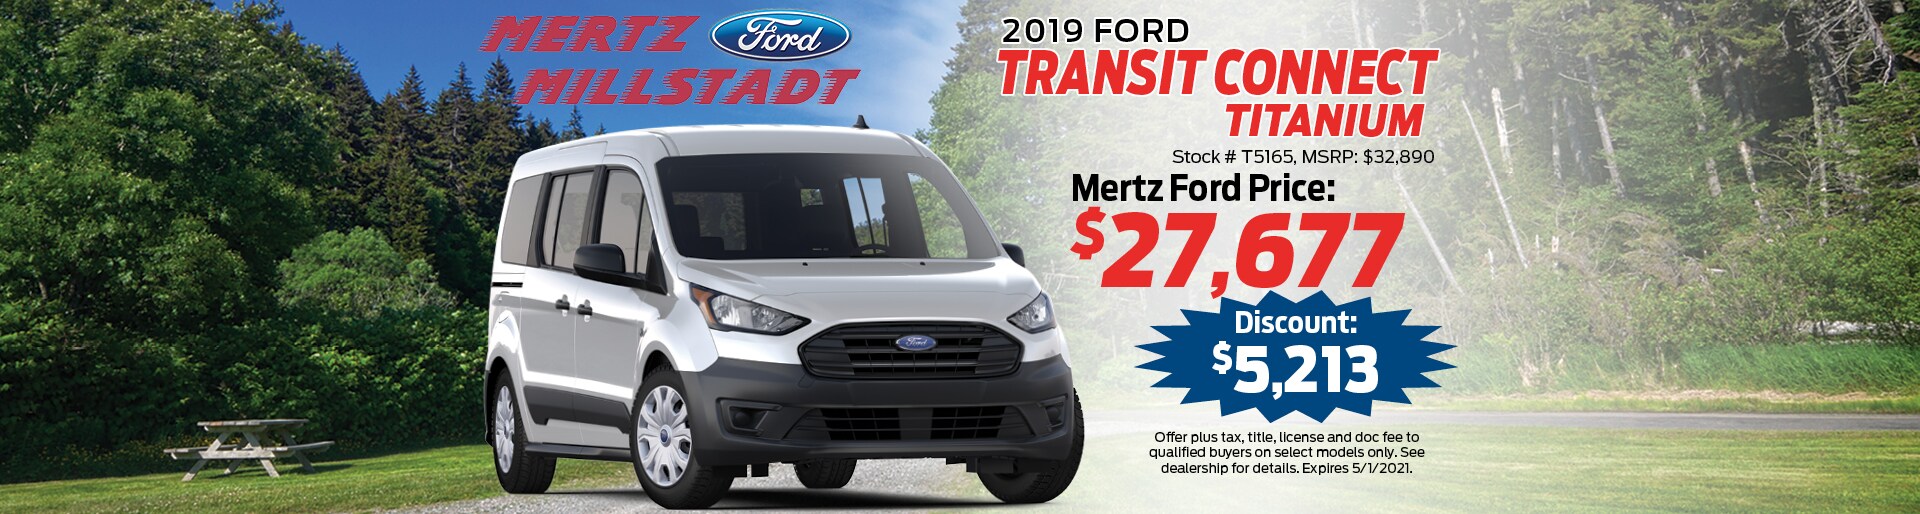 2019 Ford Transit Connect Titanium | Mertz Ford